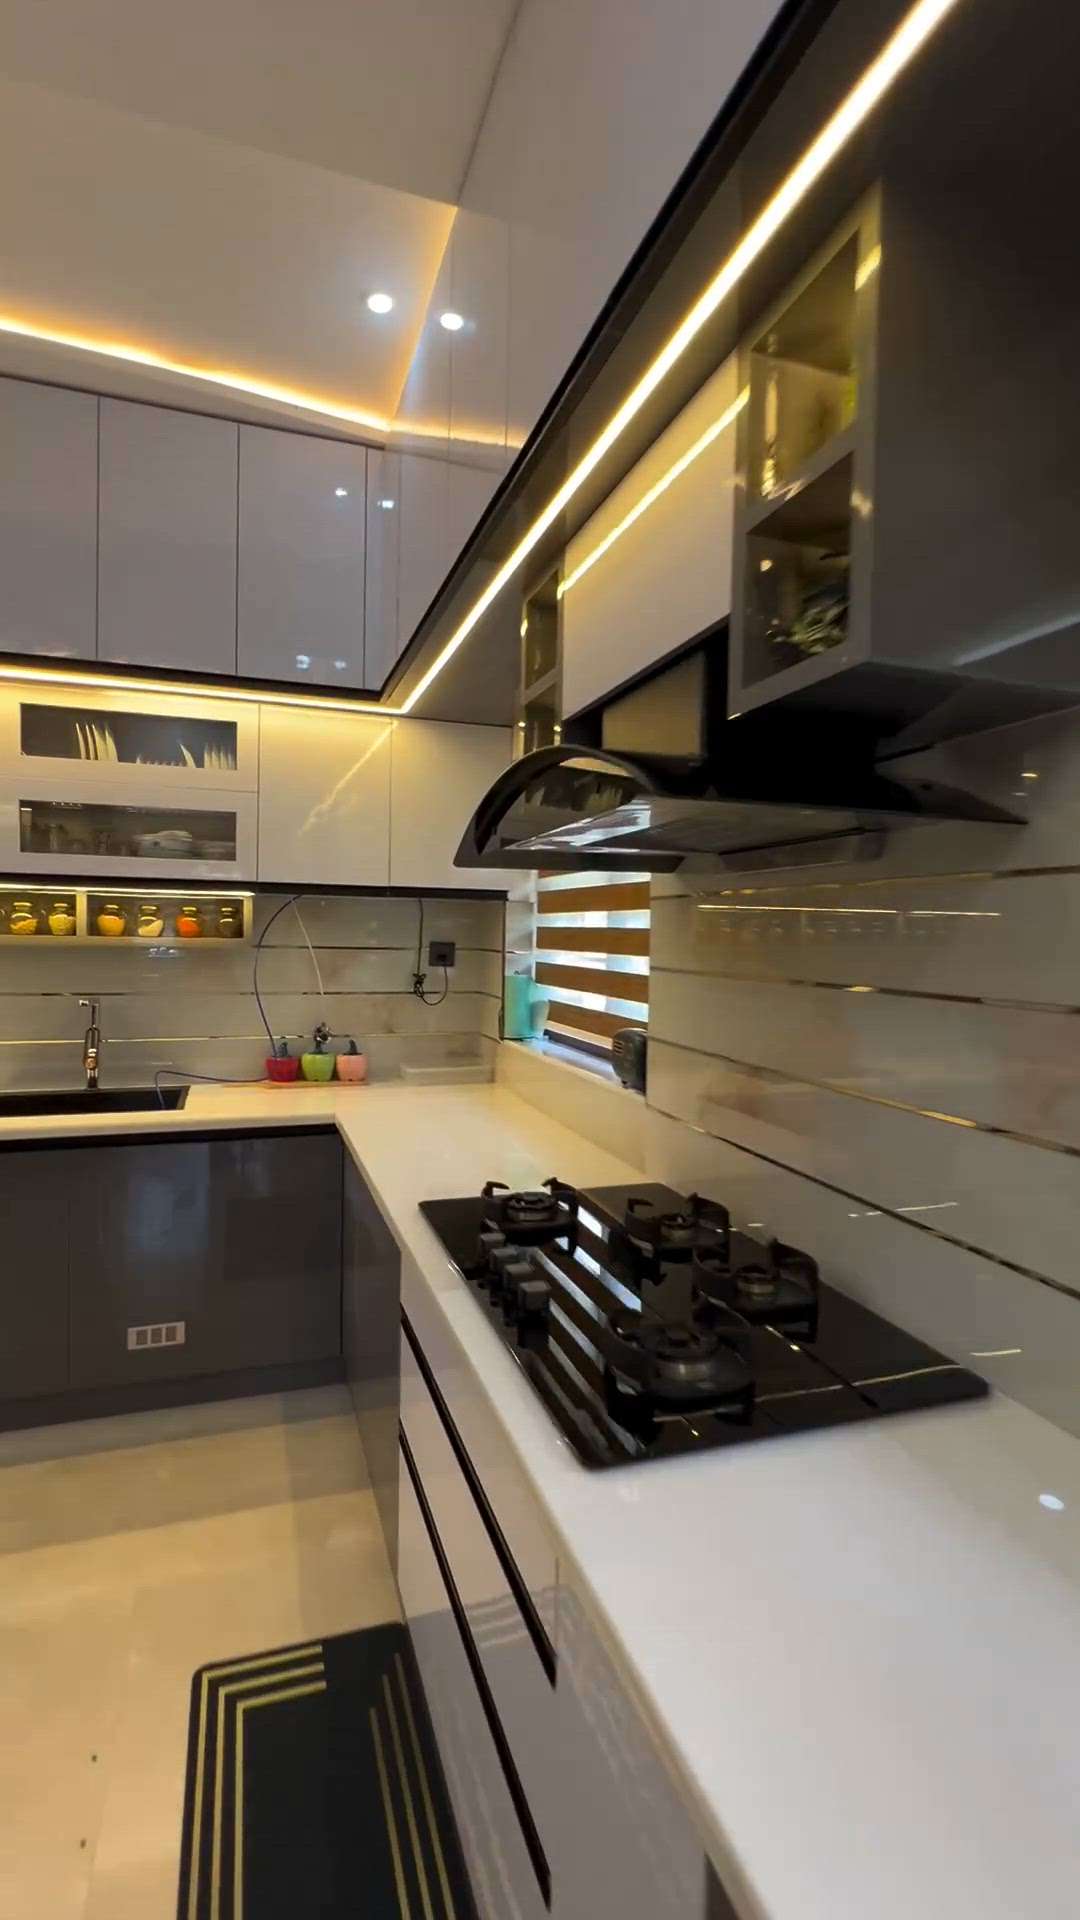 Amazing Modular kitchen latest design by Majestic modular kitchens Pvt Ltd.
#modularkitchendesign
#LShapeKitchen
#faridabad
#palwal
#hodal
#gurgaon
#kitchenmanufecturer
#kitchenmakeover
#kitchenmanufacturer
#ACRYLICKITCHEN
#HIGHGLOSSKITCHEN
#STAINLESSSTEELKITCHENS
#livspacefaridabad
#livspace
#modular_kitchen
#latestkitchendesign
#kitchendesign
#ModularKitchen
#interior_designer_in_faridabad
#palwal
#kitchencabinets
WWW.MAJESTICINTERIORS.CO.IN
9911692170